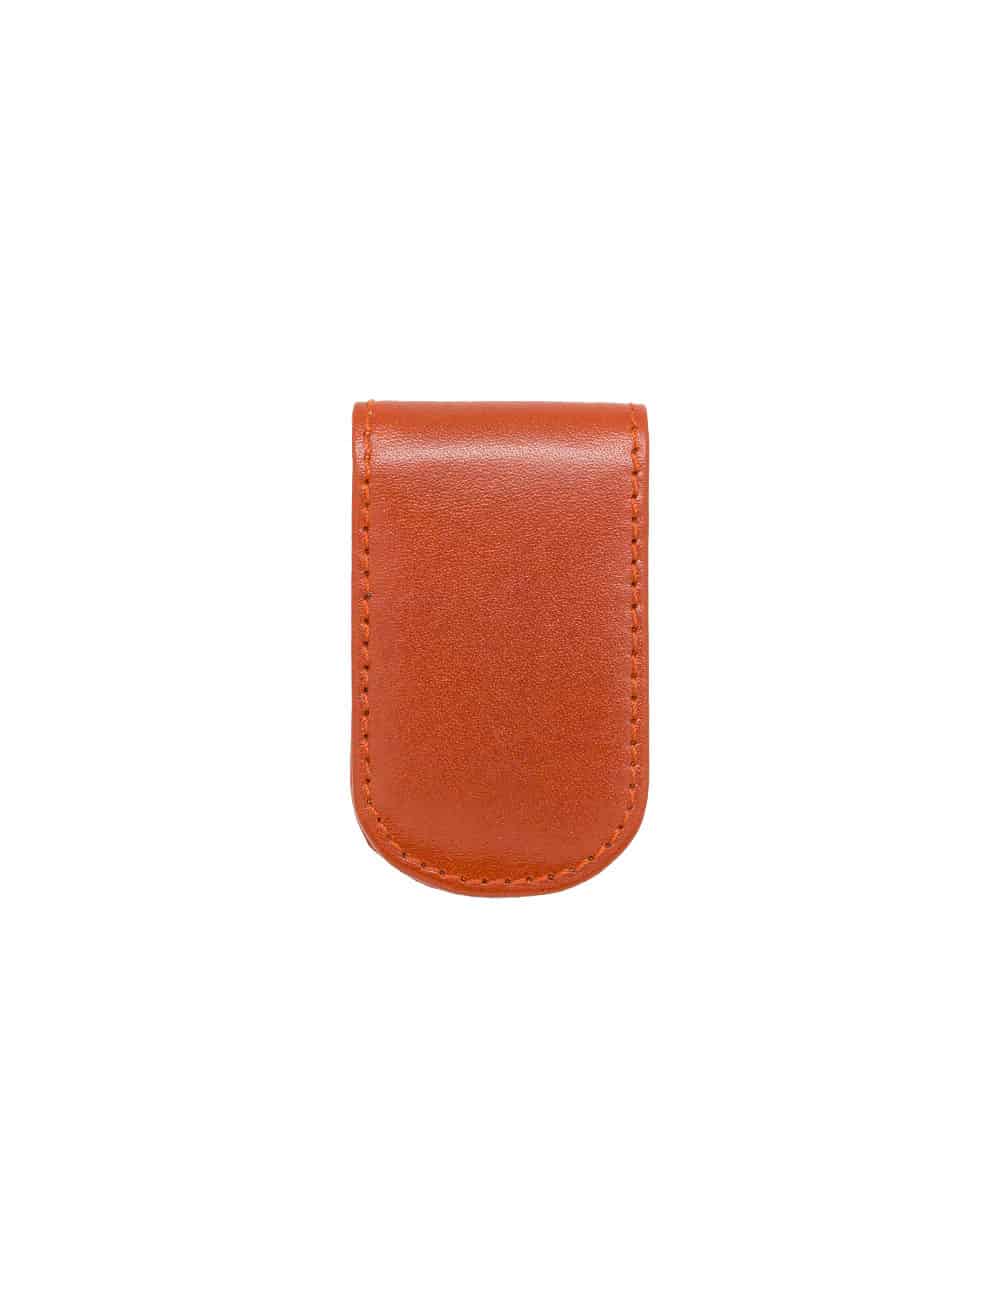 Orange 100% Genuine Top Grain Leather Money Clip SLG3.NOB1